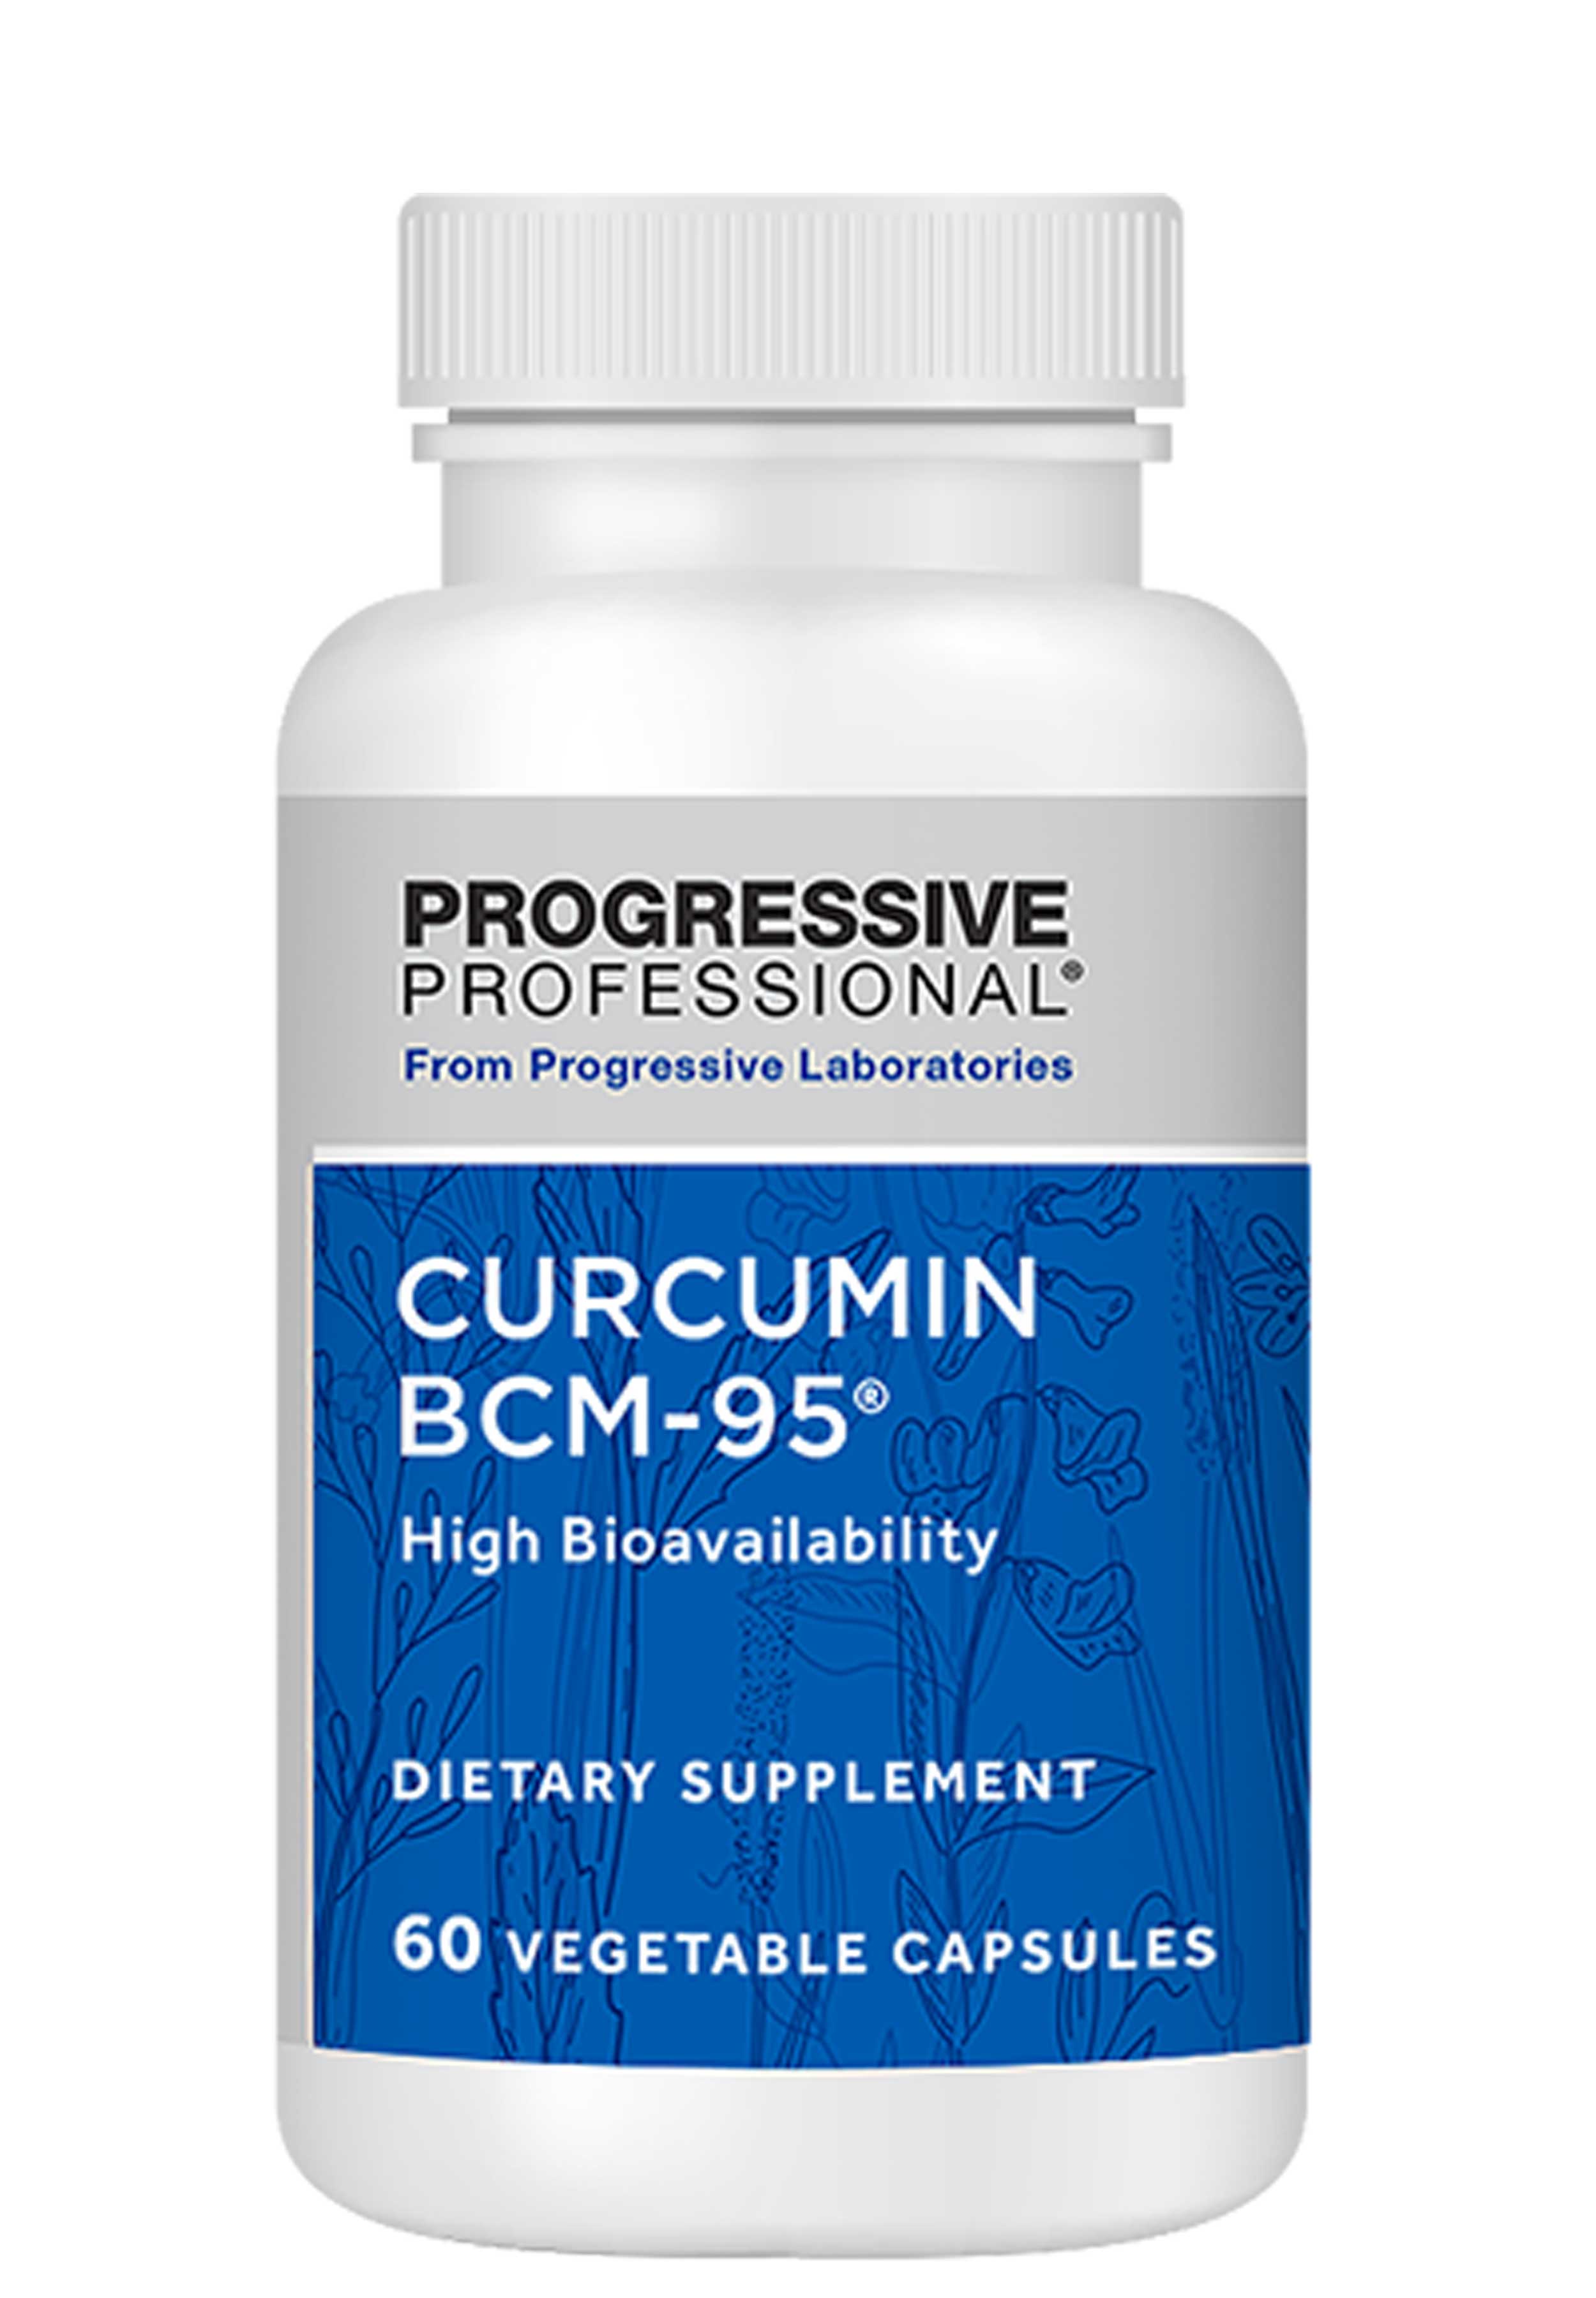 Progressive Laboratories Curcumin BCM-95